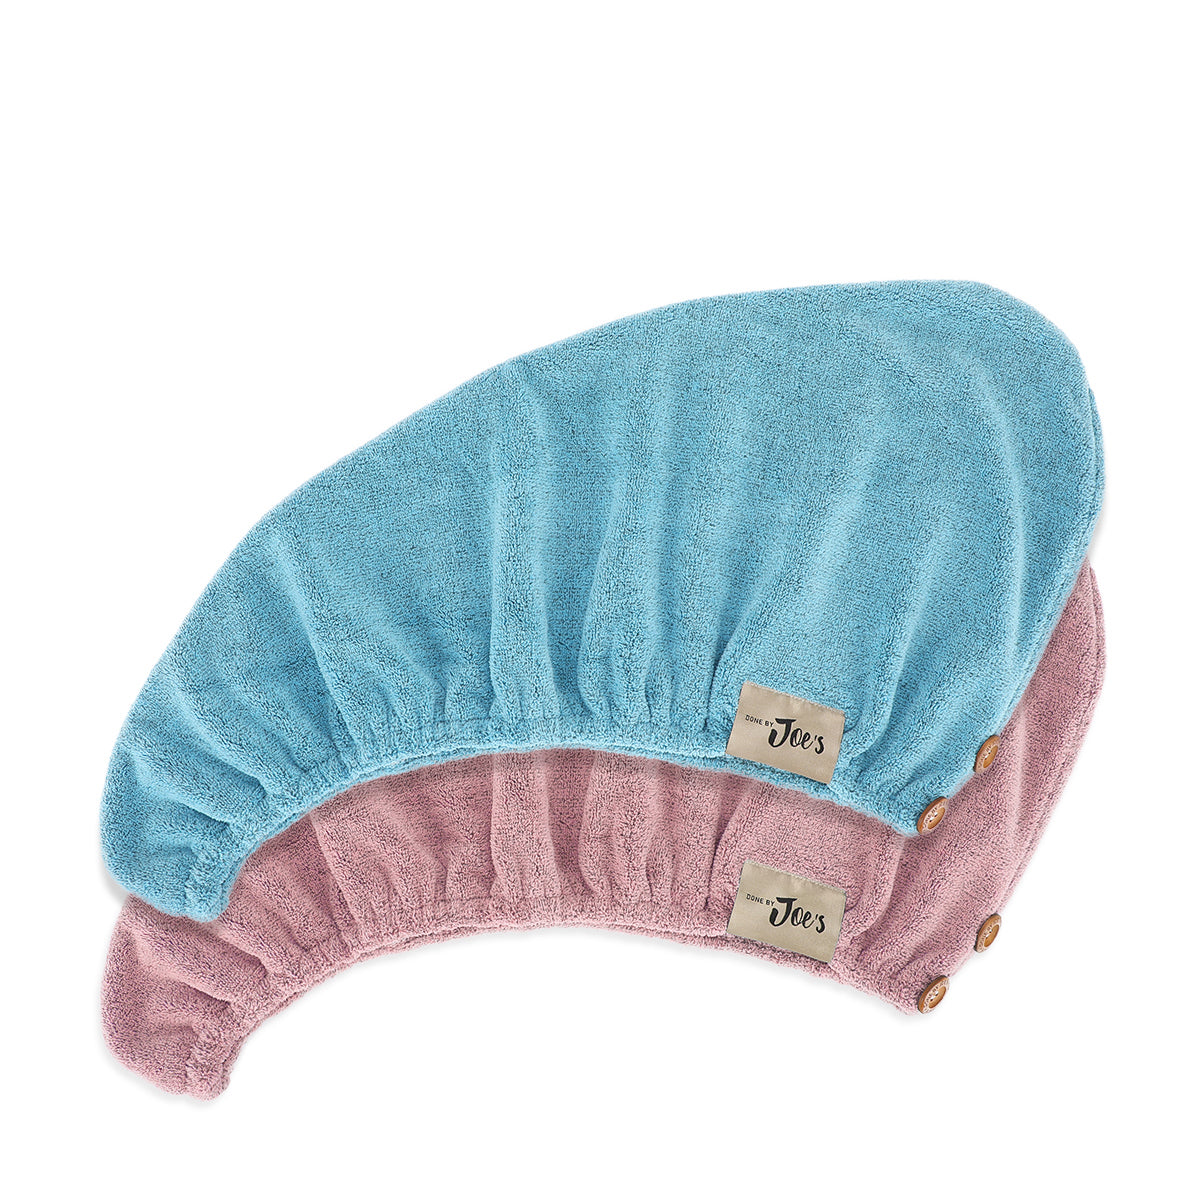 Organic Bamboo Charcoal Fiber Hair Towel 4X Faster - Blue & Pink